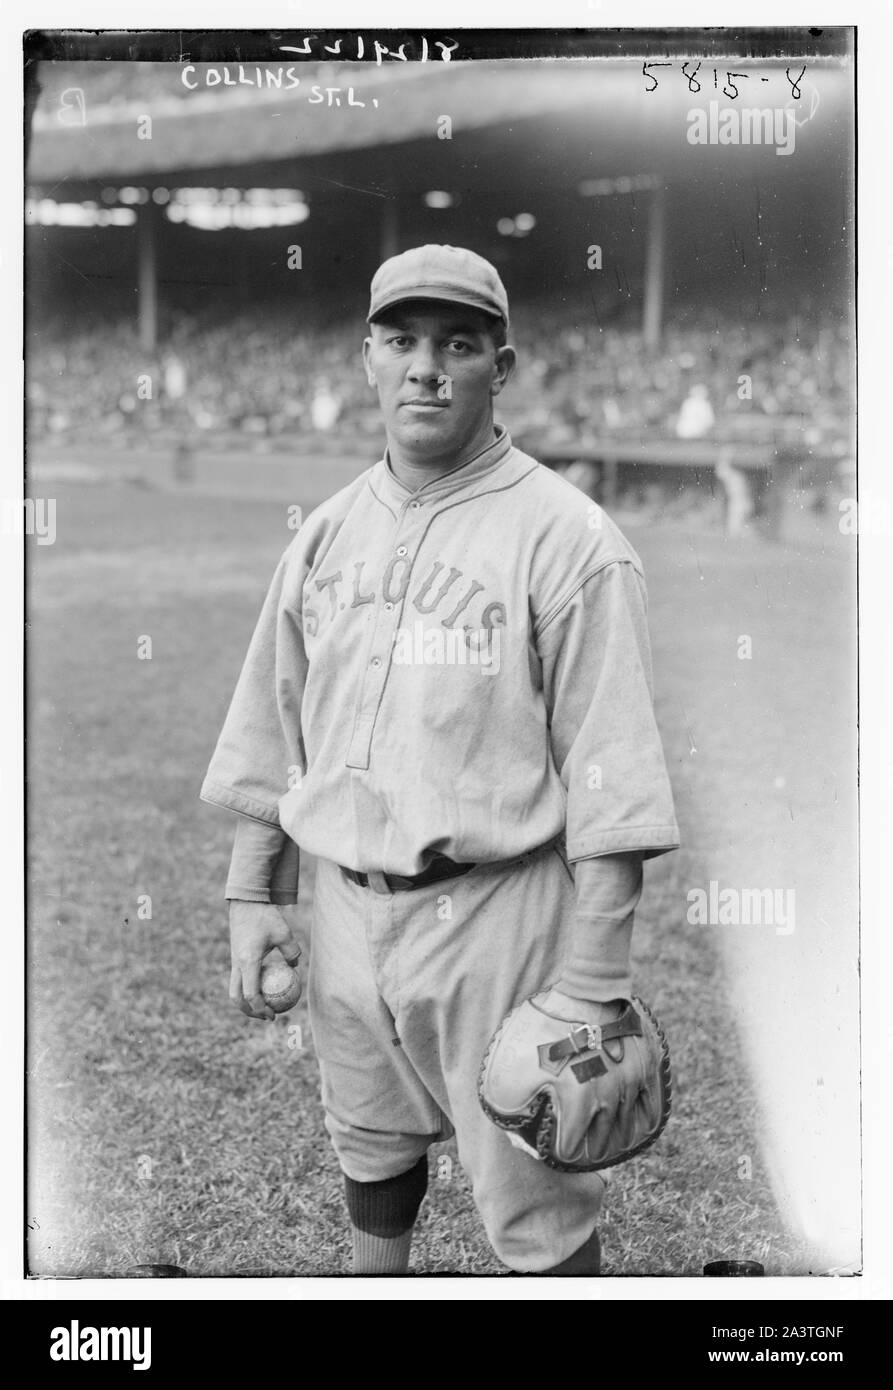 Tharon Pat Collins, St. Louis NL (baseball) Stock Photo